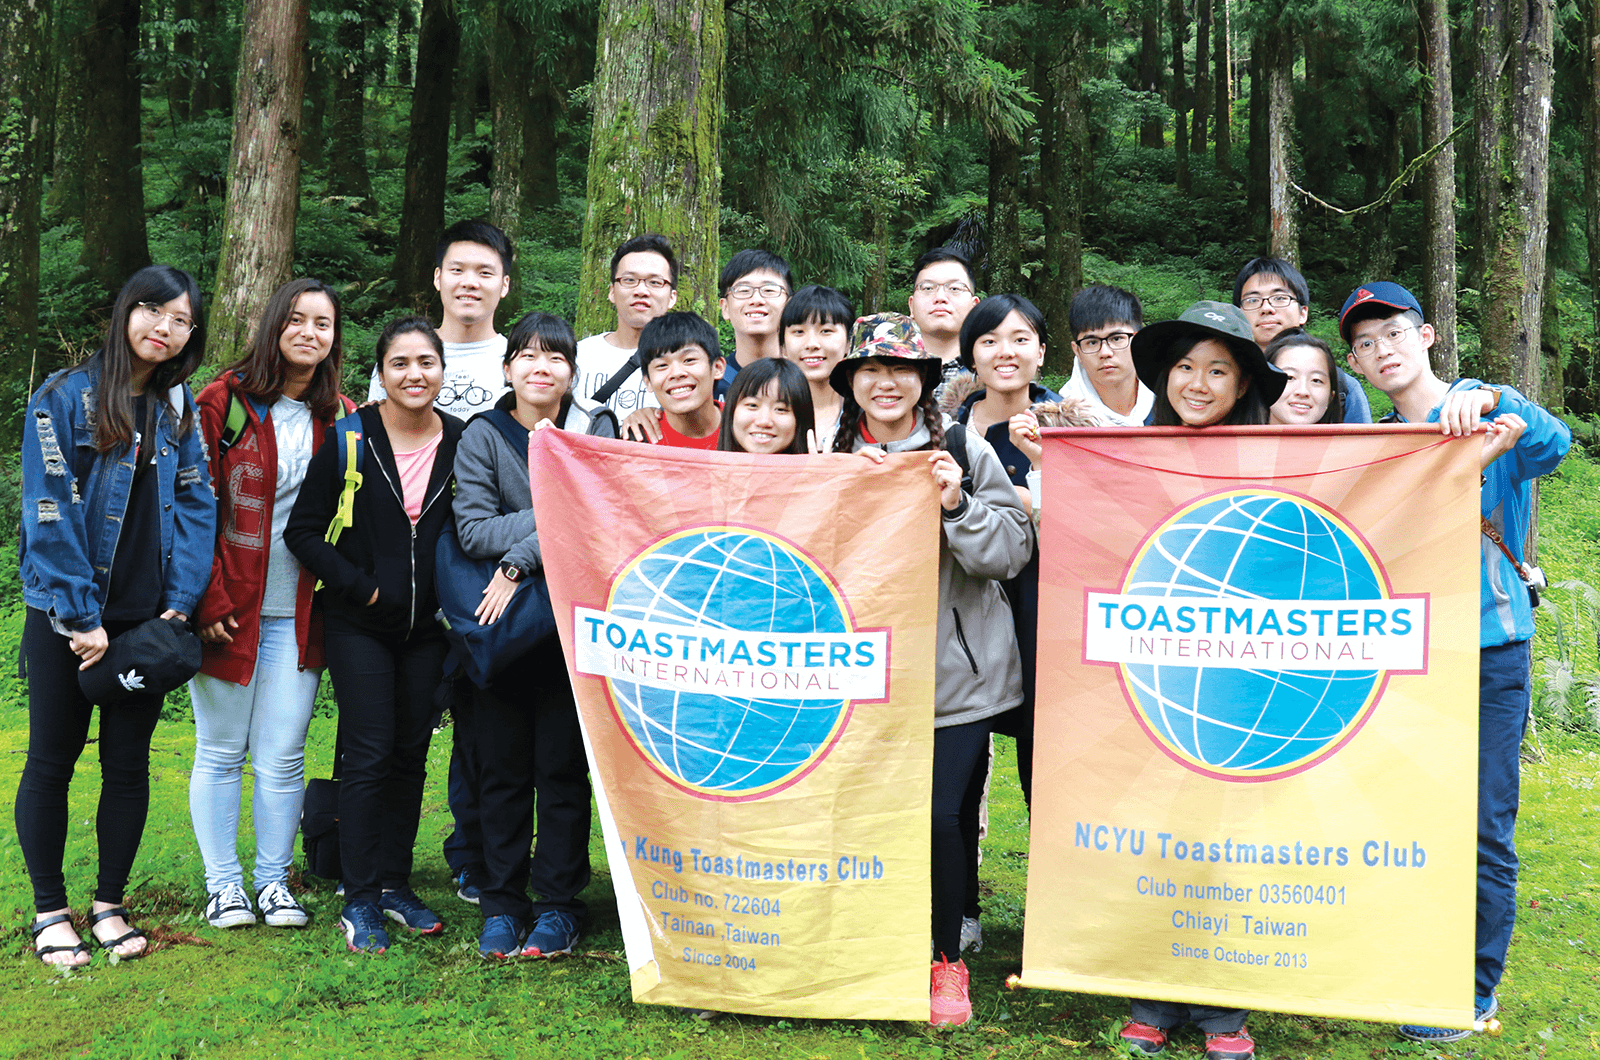 Toastmasters Taiwan Clubs